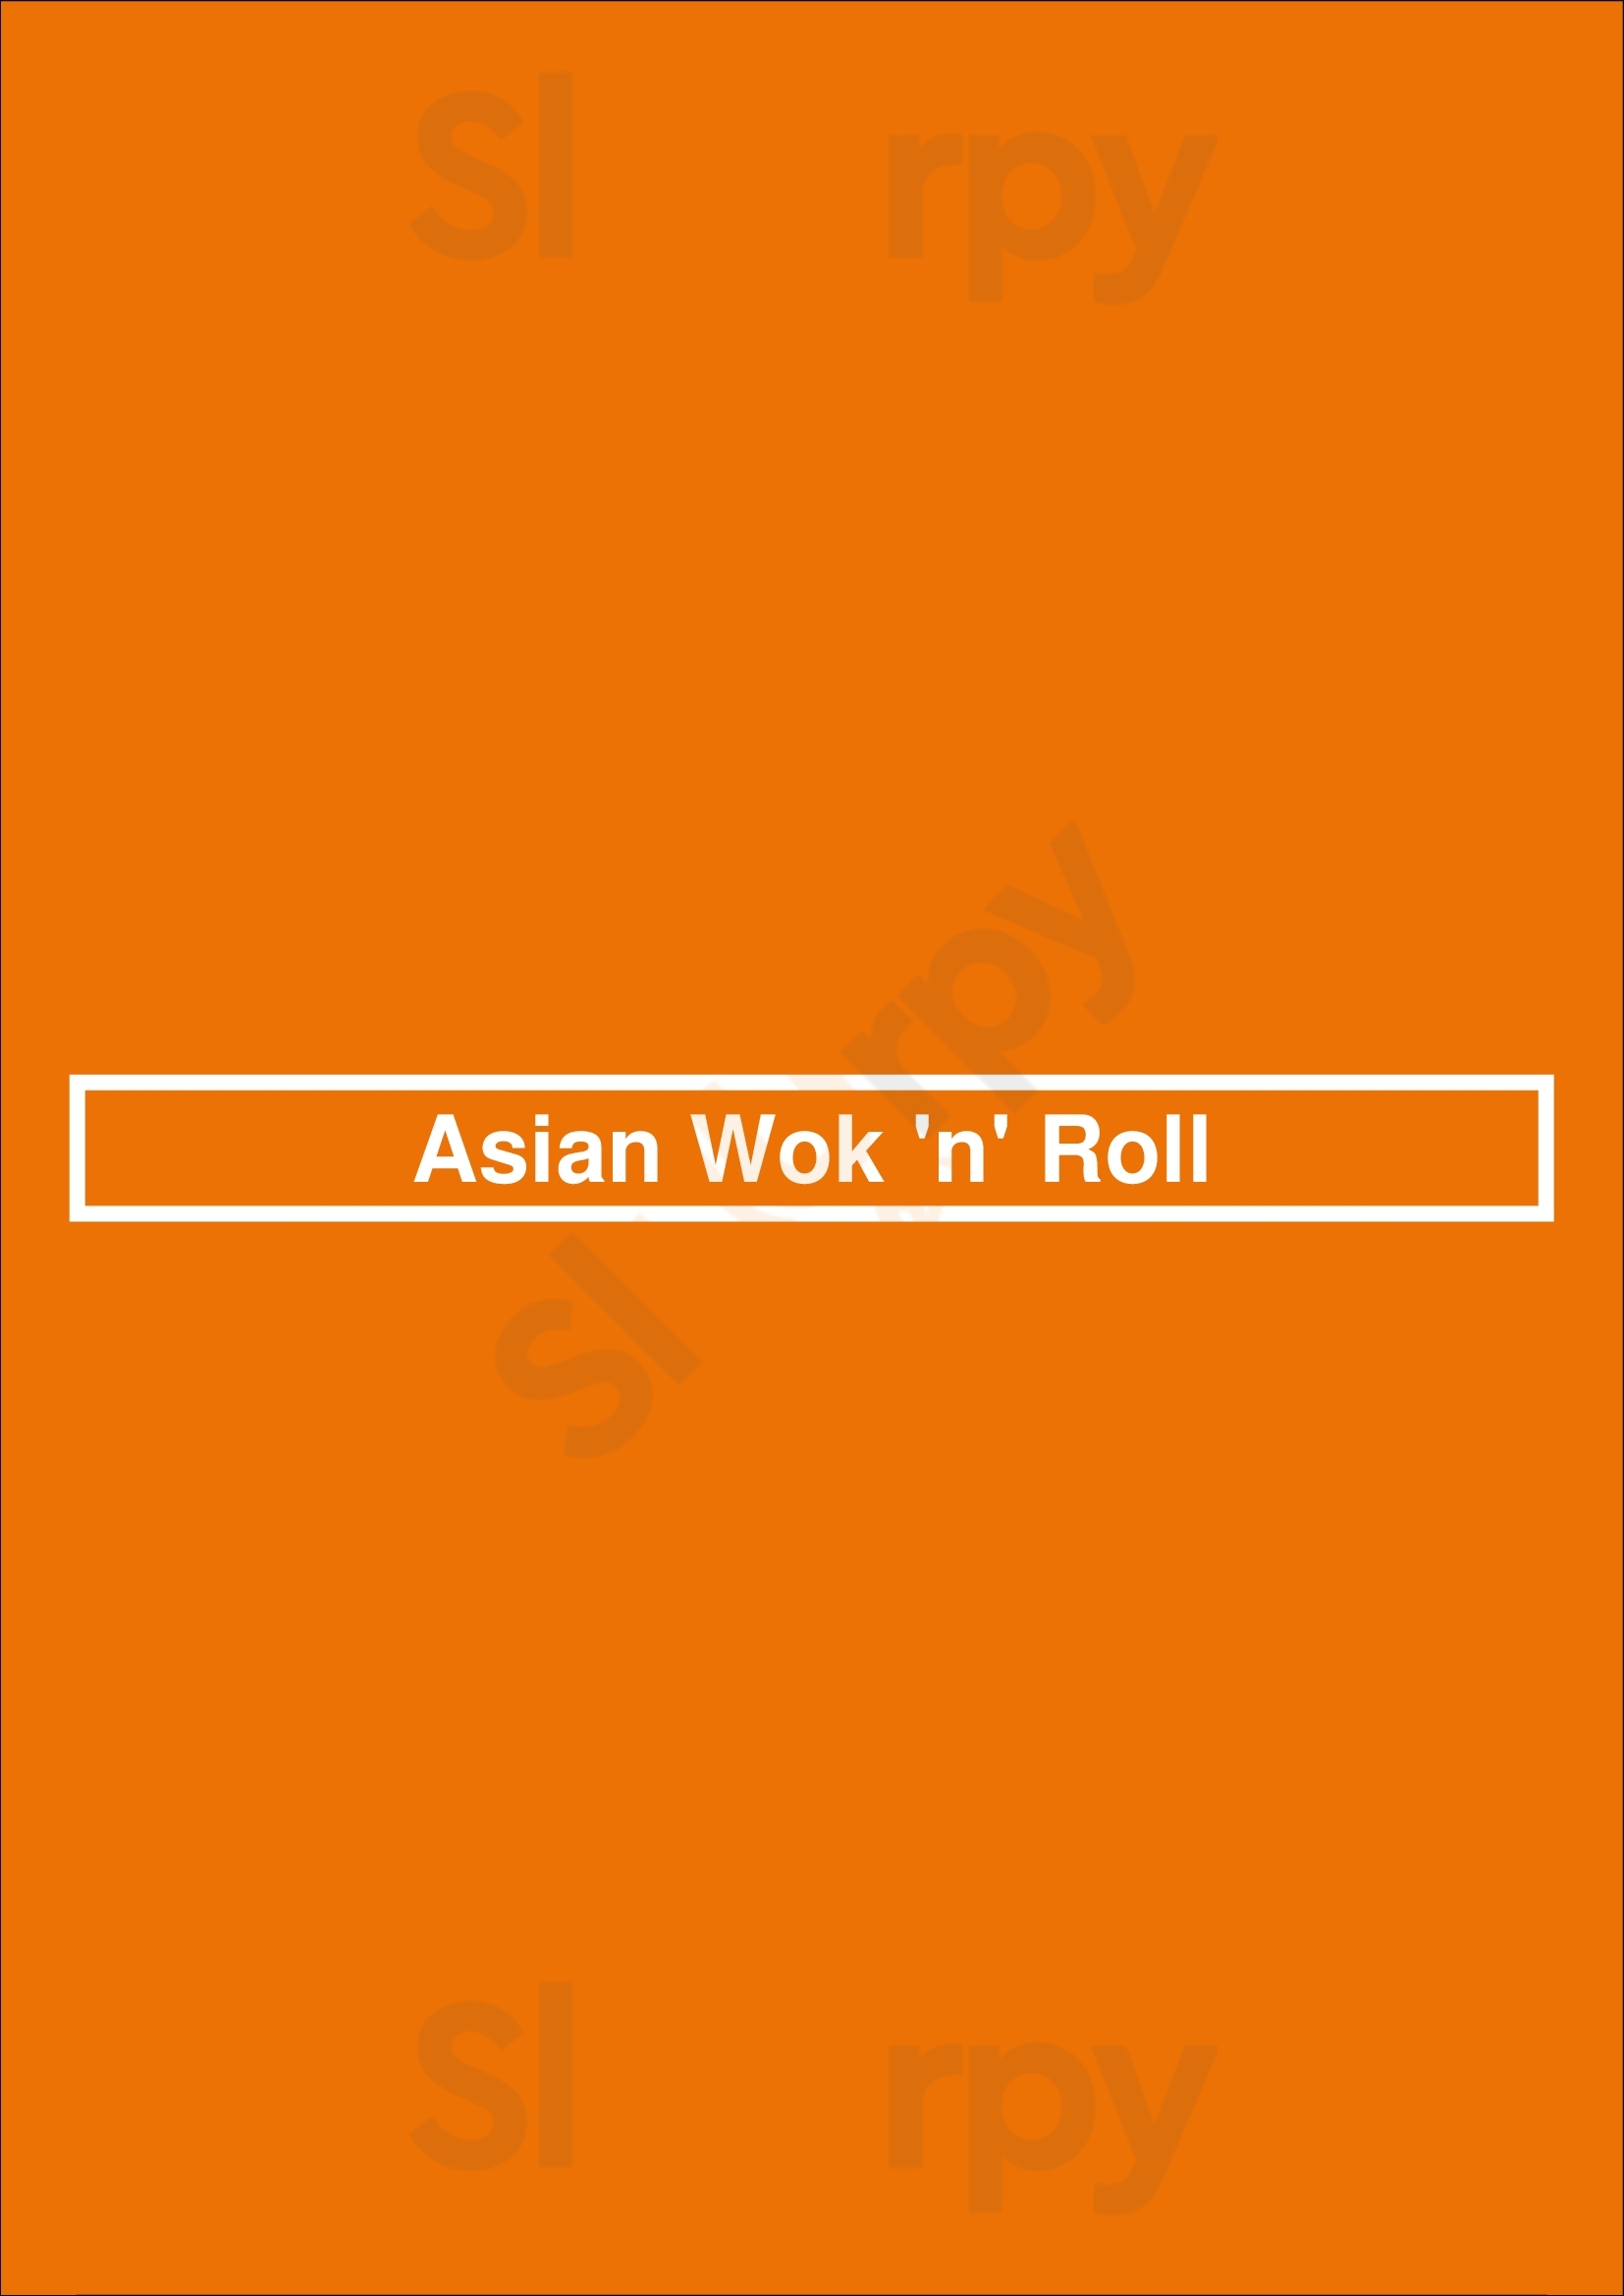 Asian Wok 'n' Roll Mississauga Menu - 1